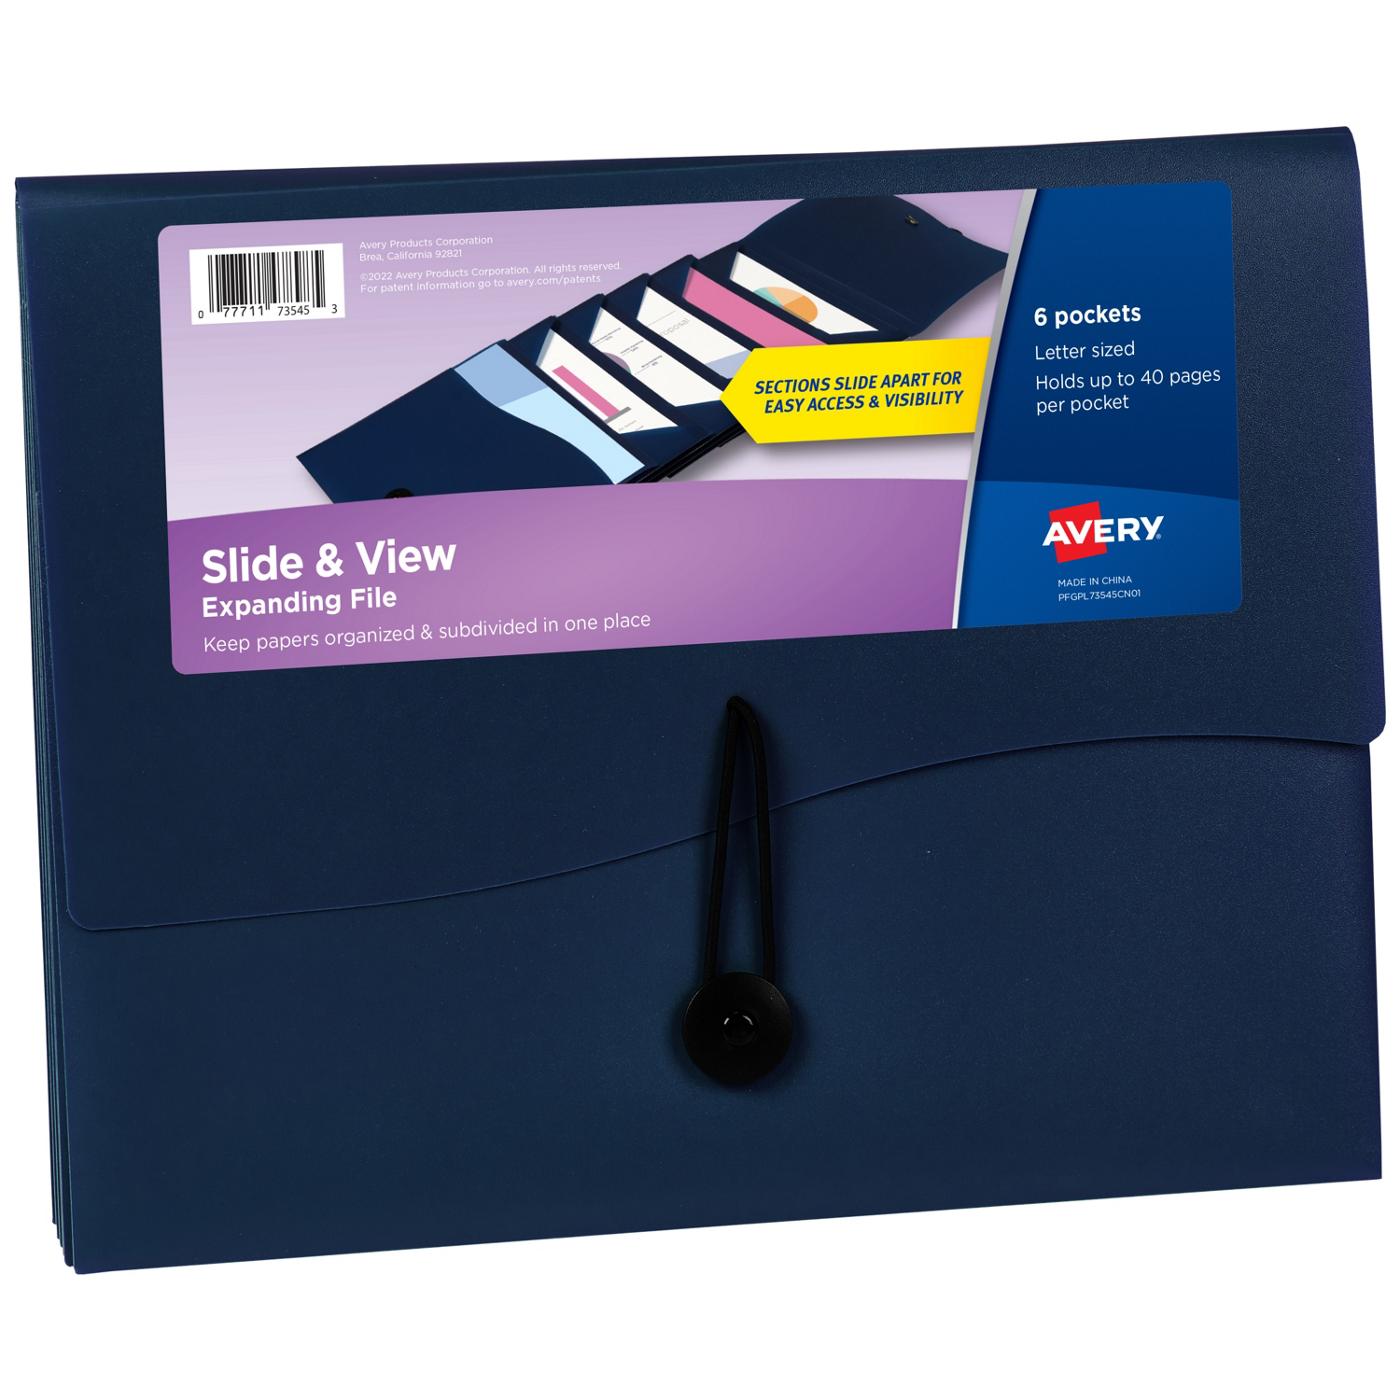 Avery Slide & View 6 Pocket Expanding File Folder - Navy; image 1 of 3